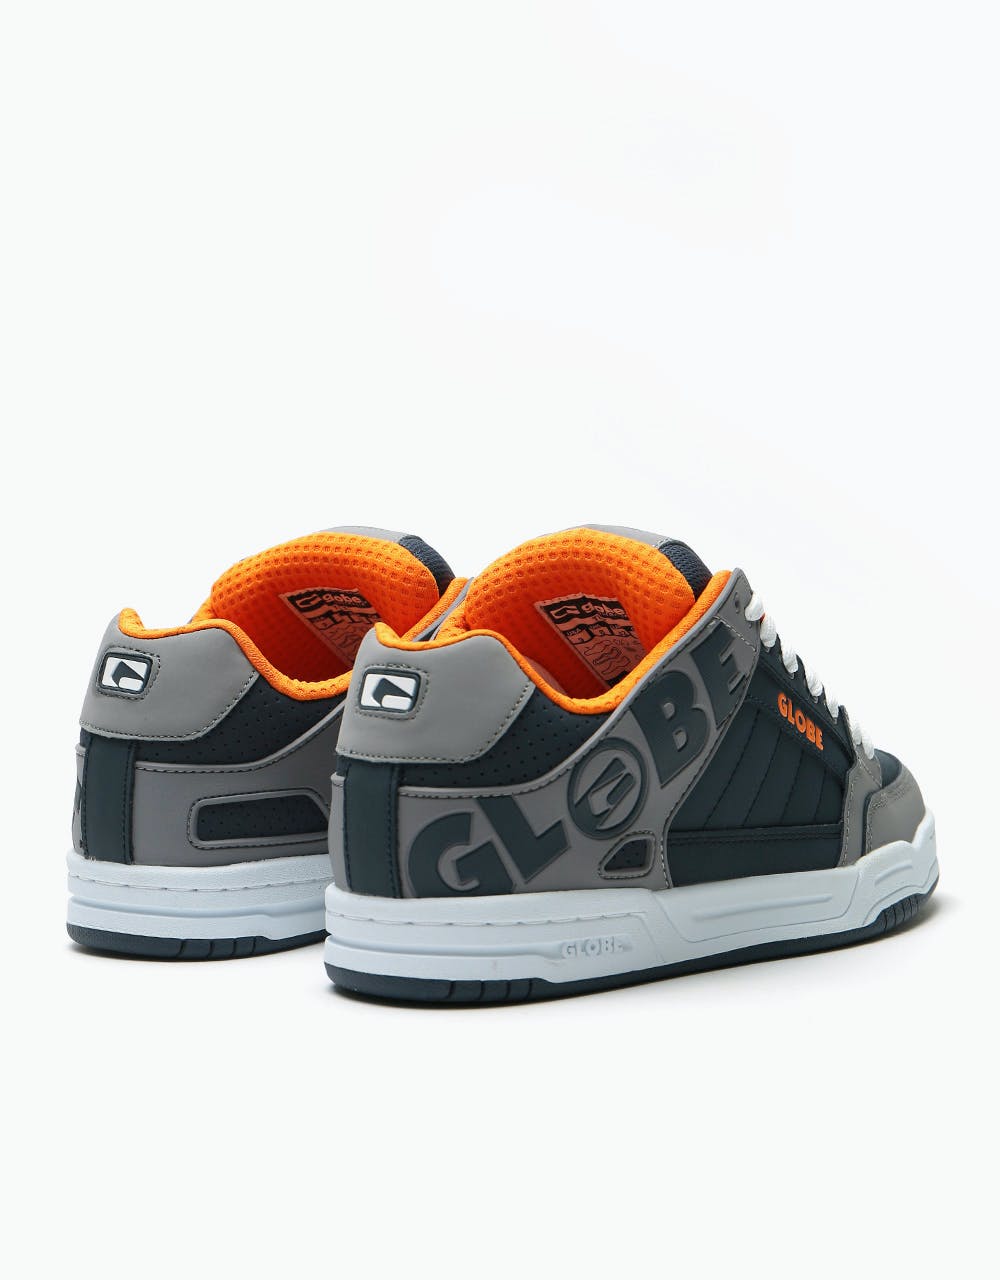 Globe Tilt Skate Shoes - Grey/Navy/Orange